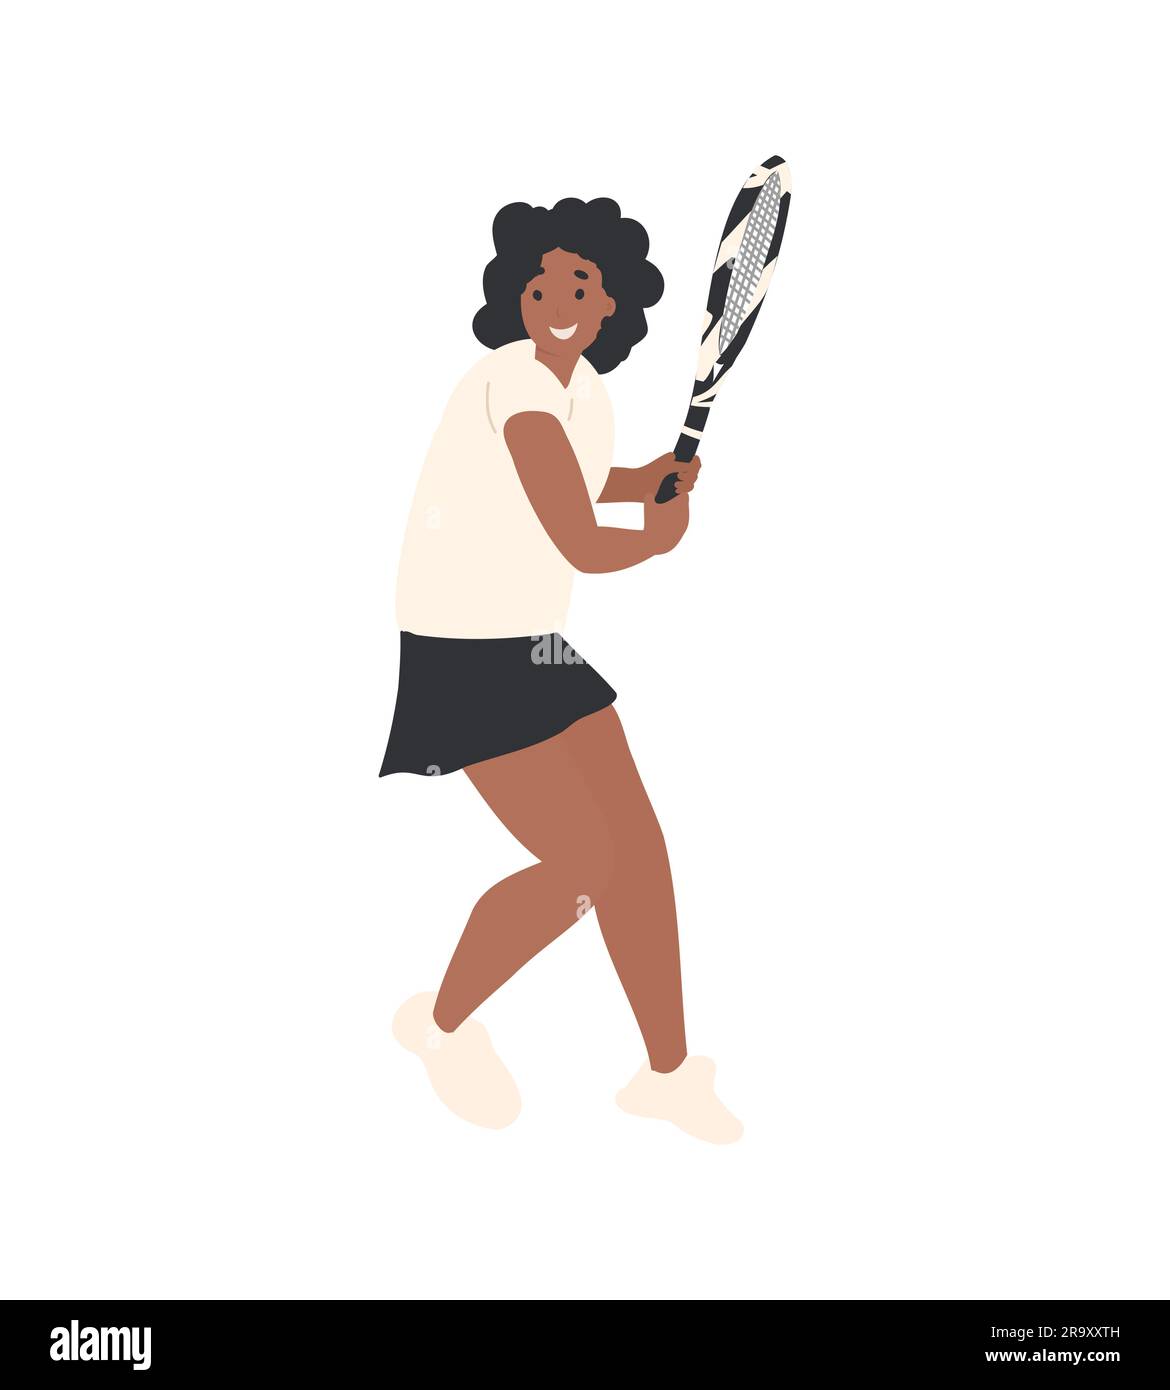 tennis player black woman, playing tennis Stock Vector